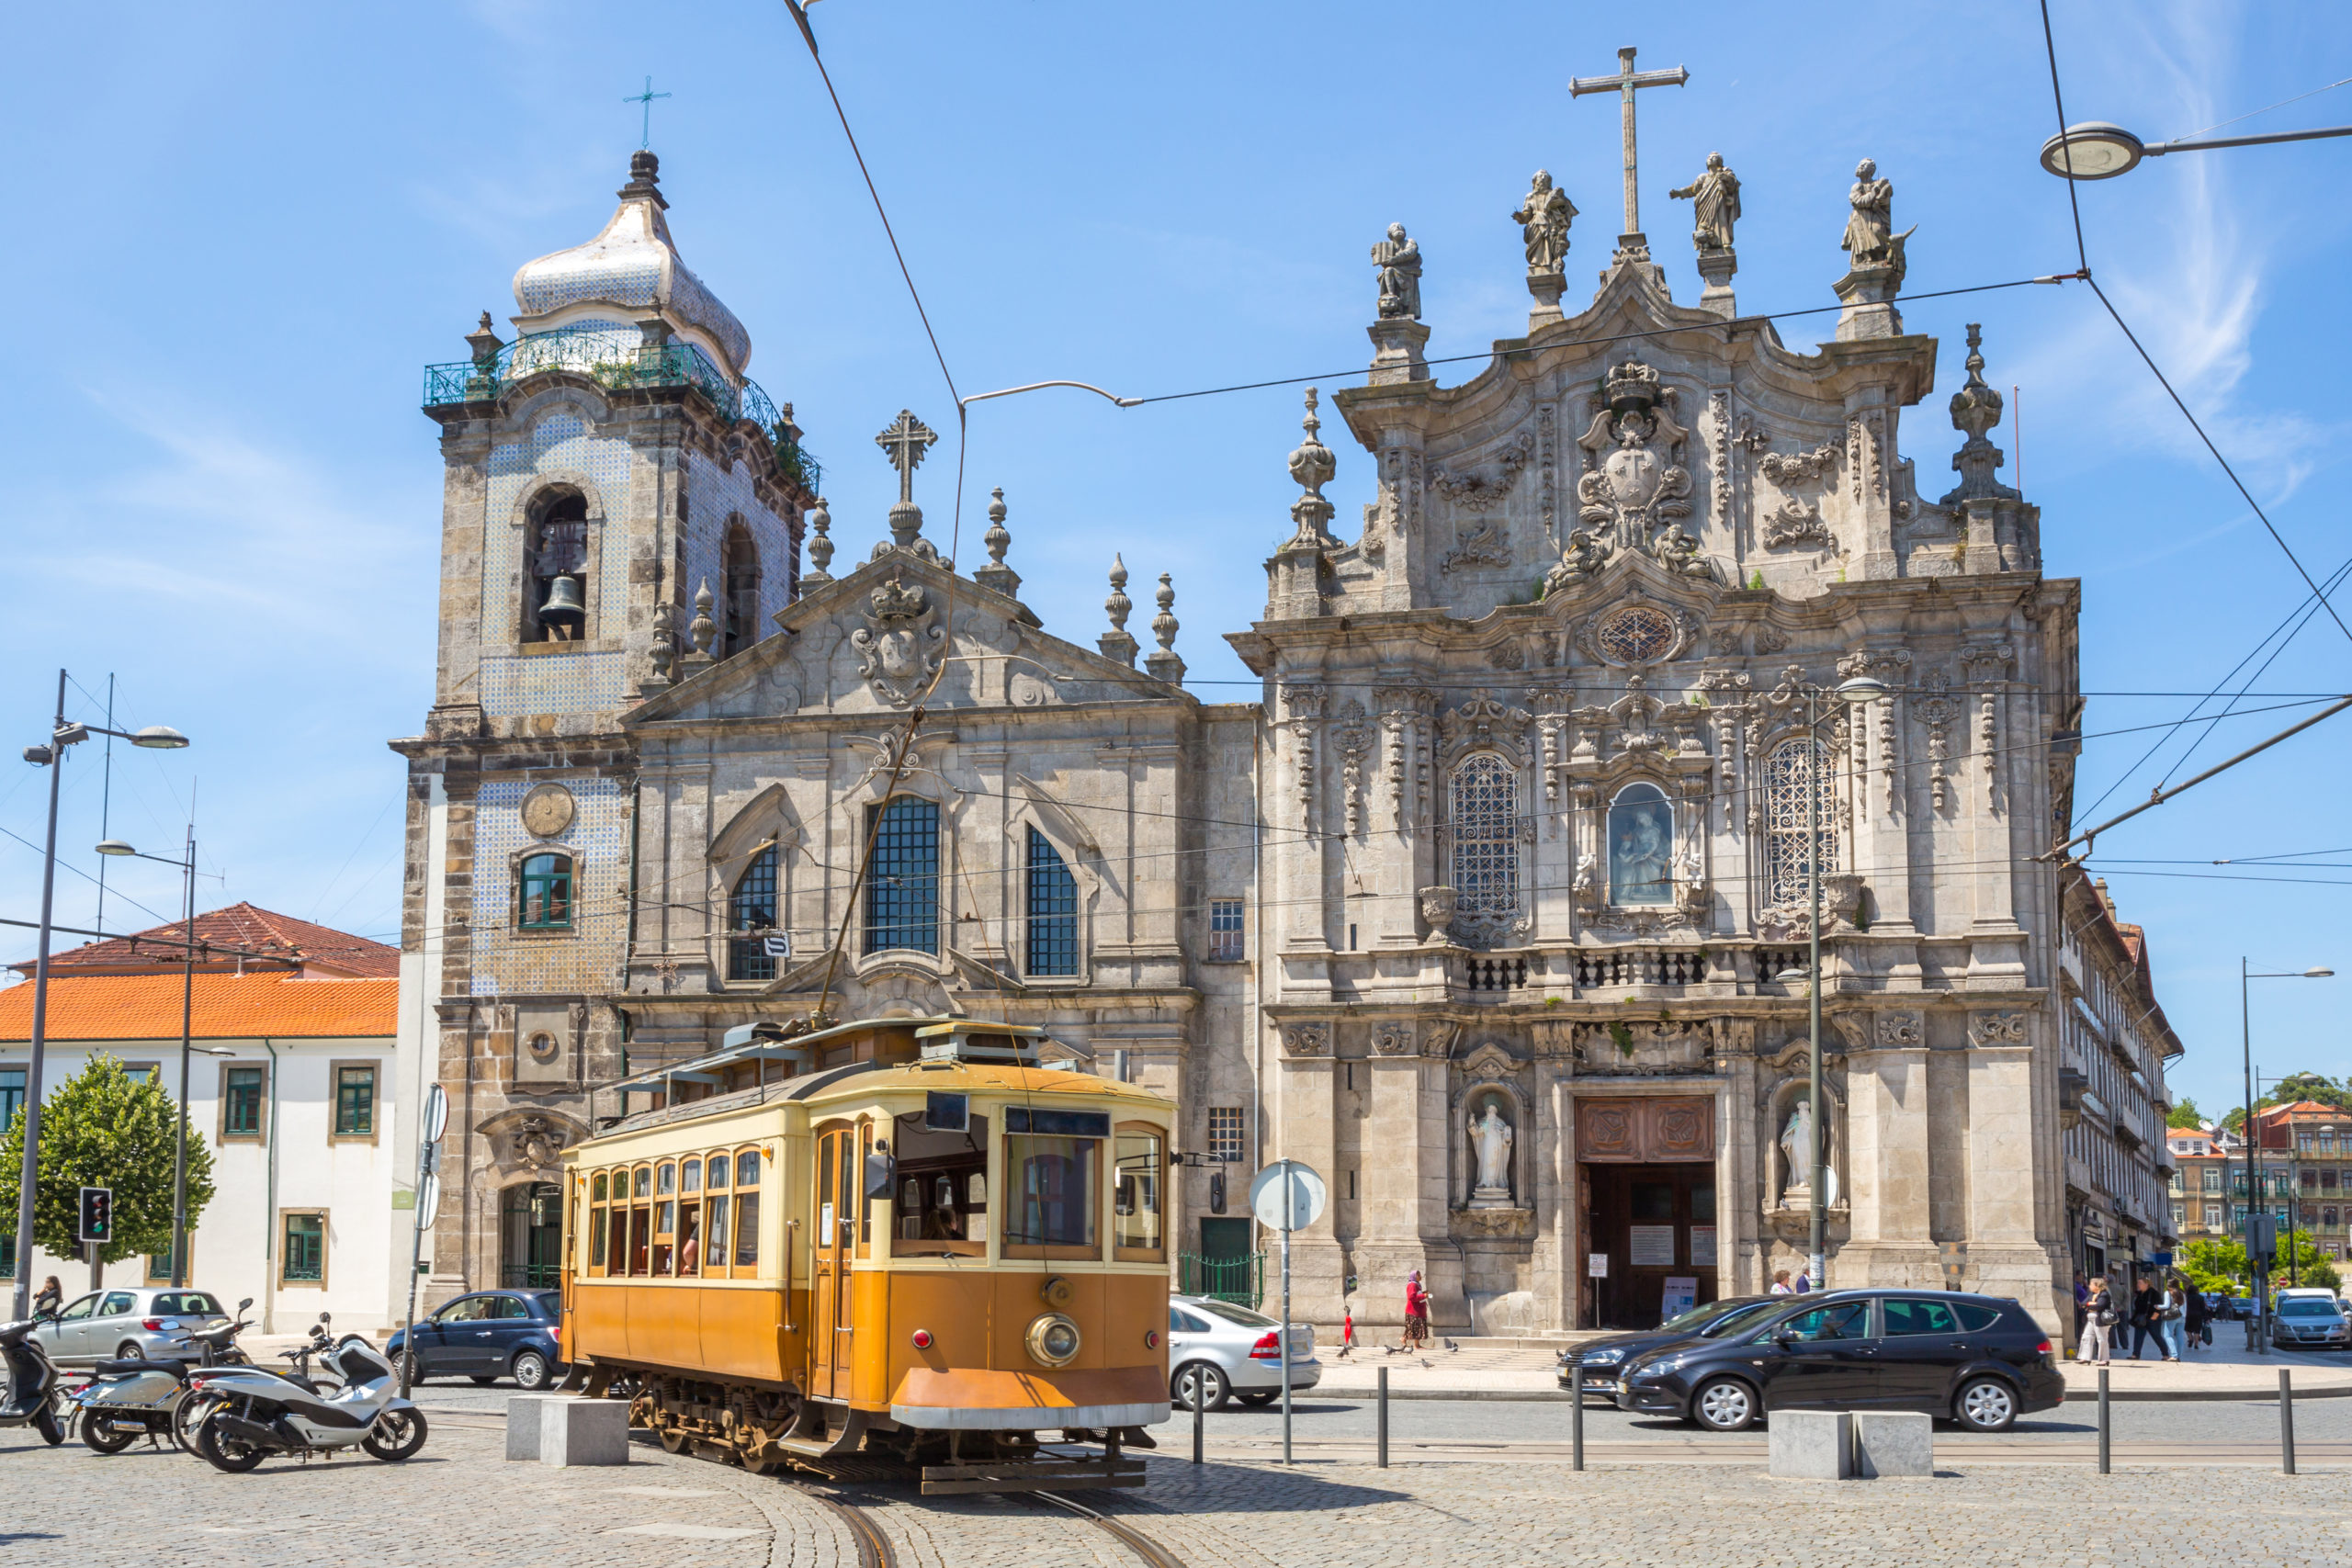 Tranvías de Oporto